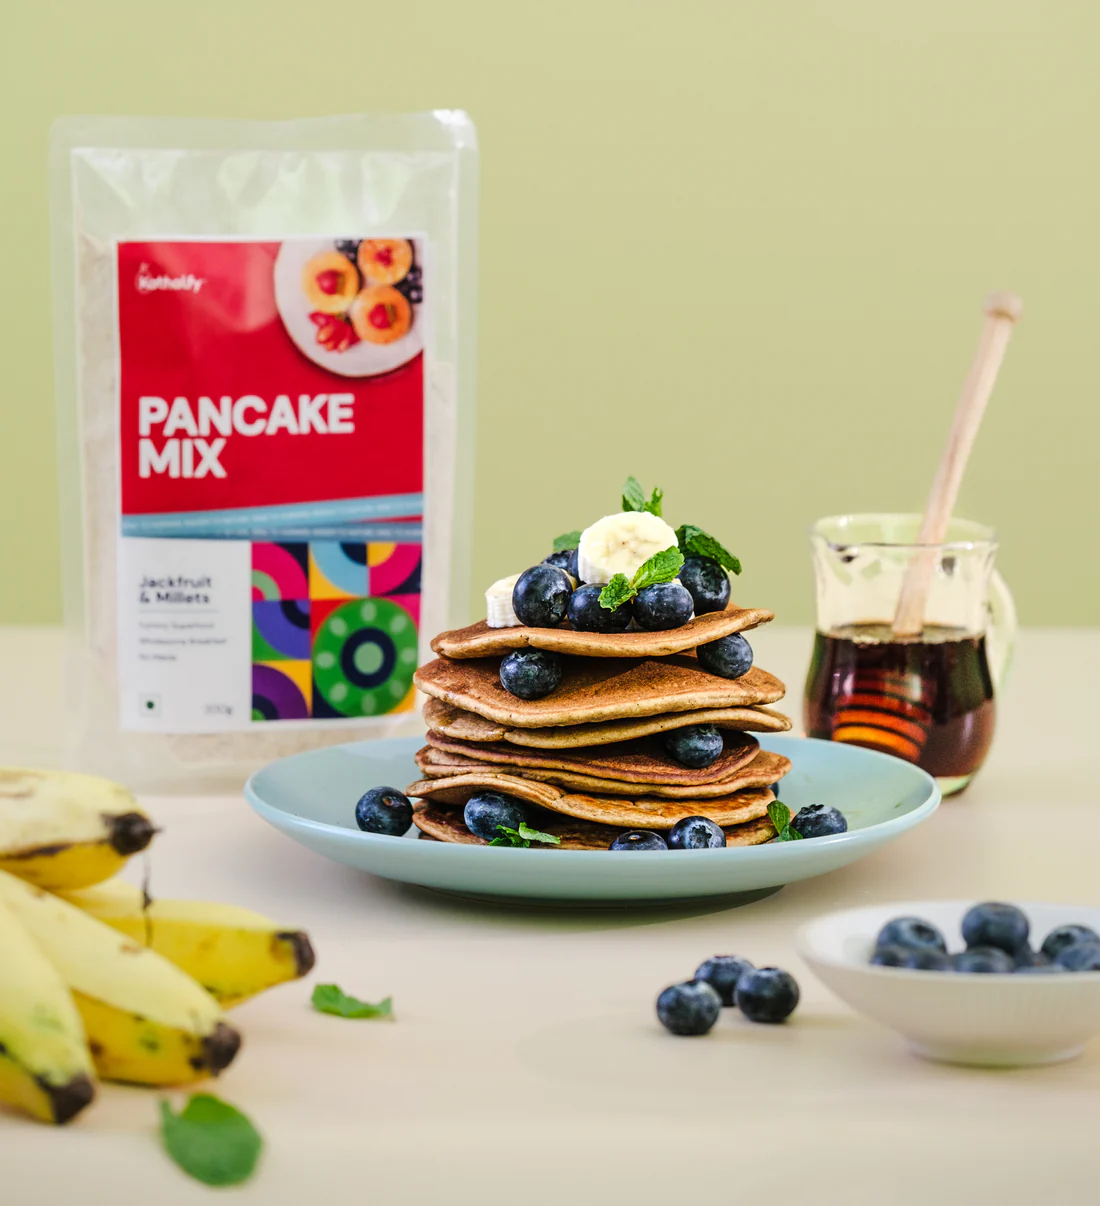 Pancake Mix (Pack Of 2) by Kathalfy